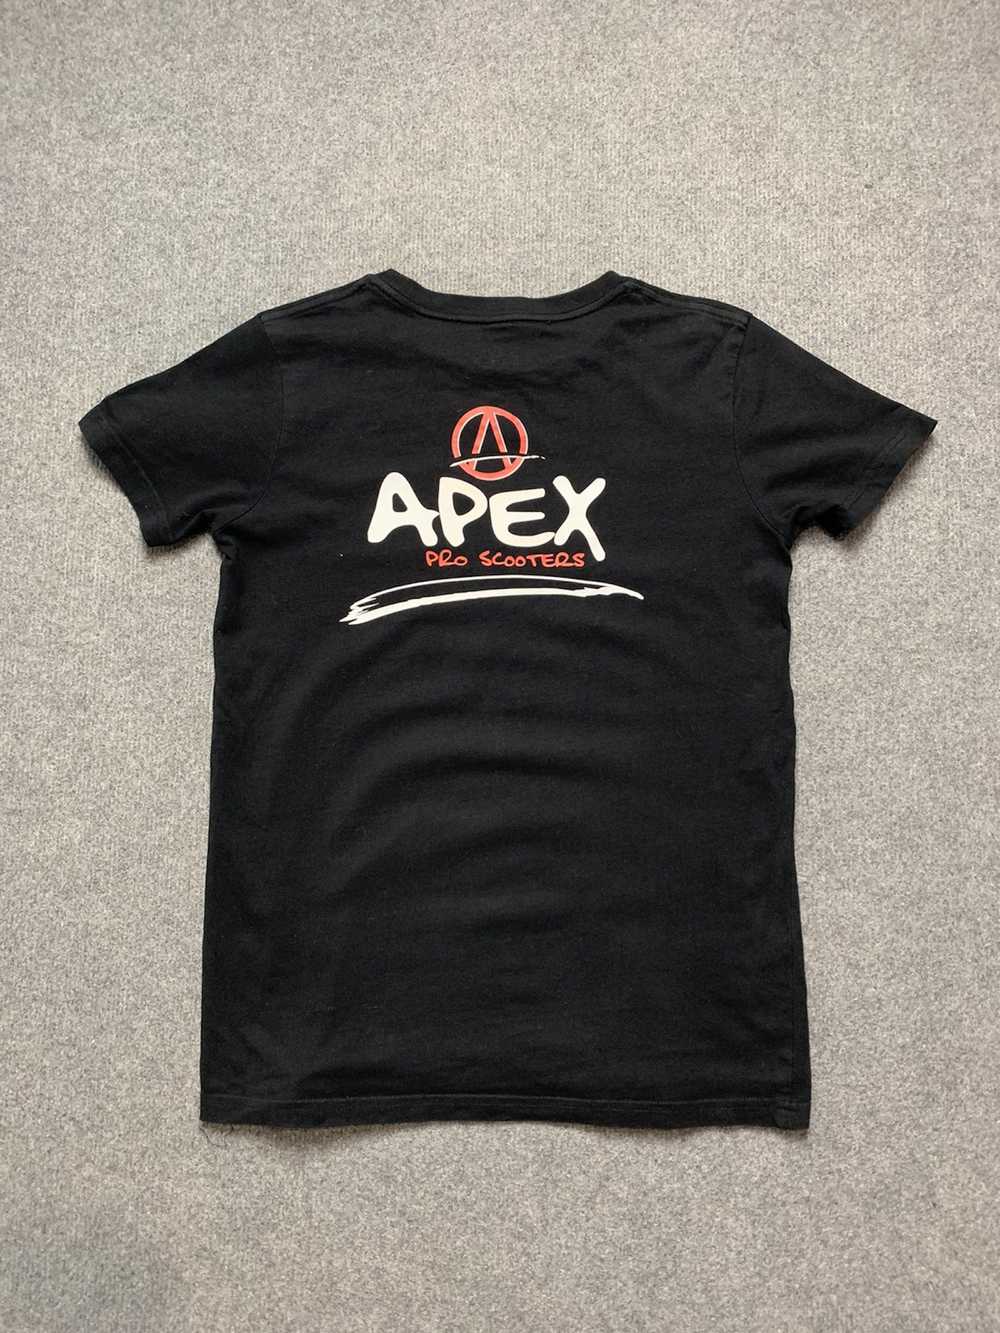 Apex × Apex One Apex t-shirt - image 3